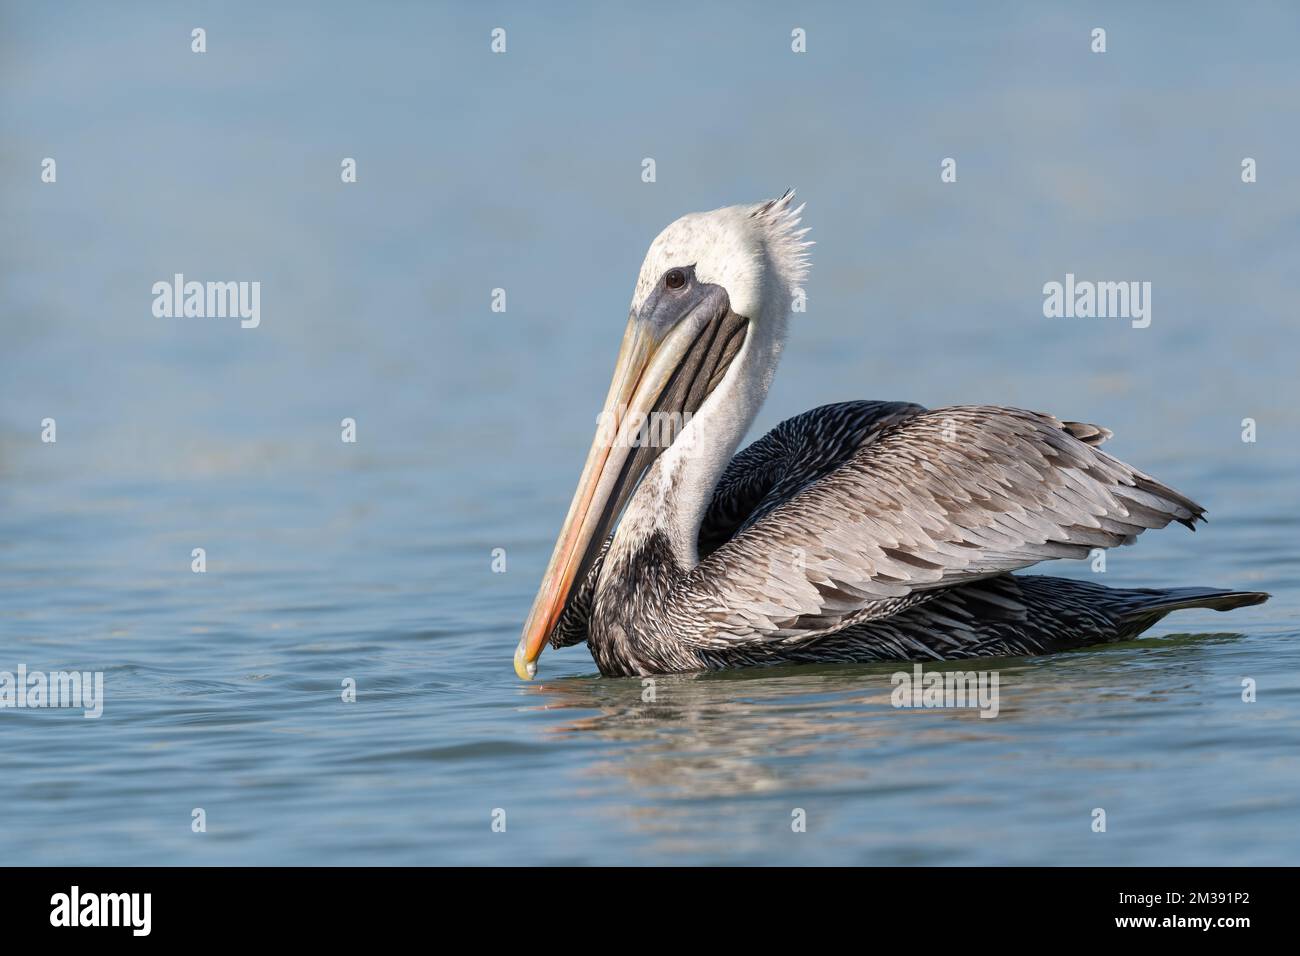 A Brown pelican (Pelecanus occidentalis) swimming in the Florida Keys, USA. Stock Photo